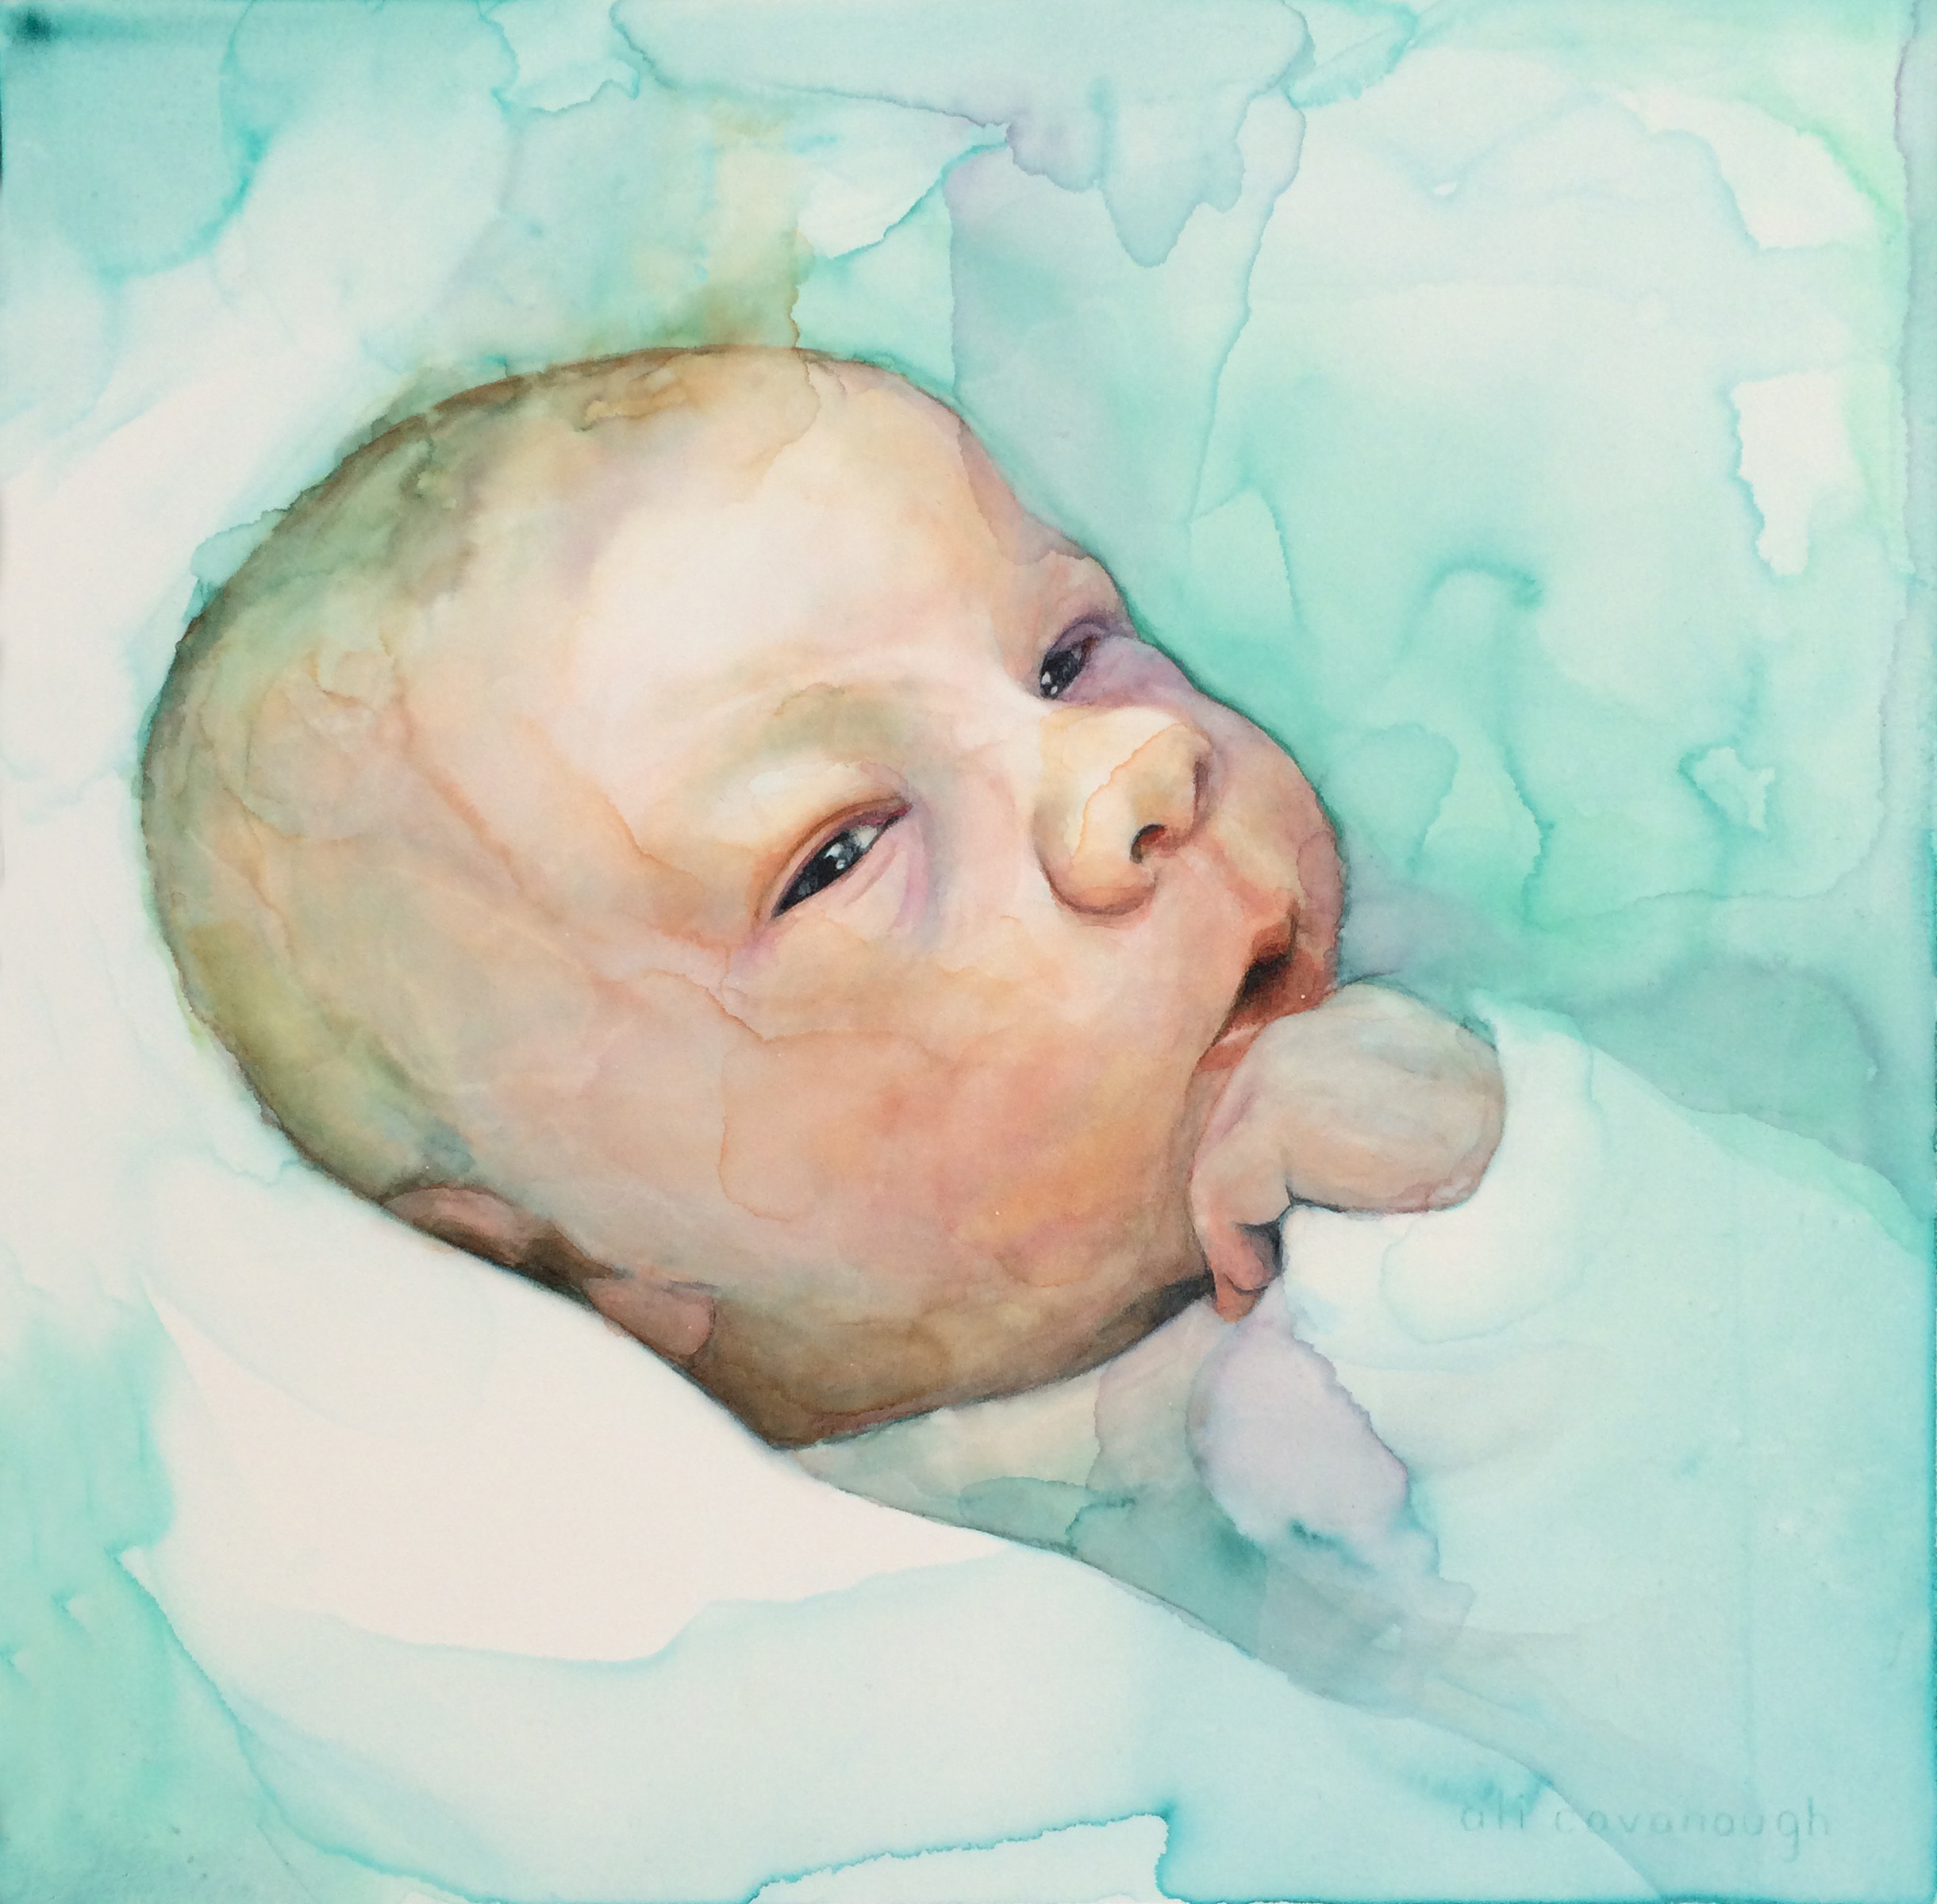 Watercolors of babies - Ali Cavanaugh - RealismToday.com